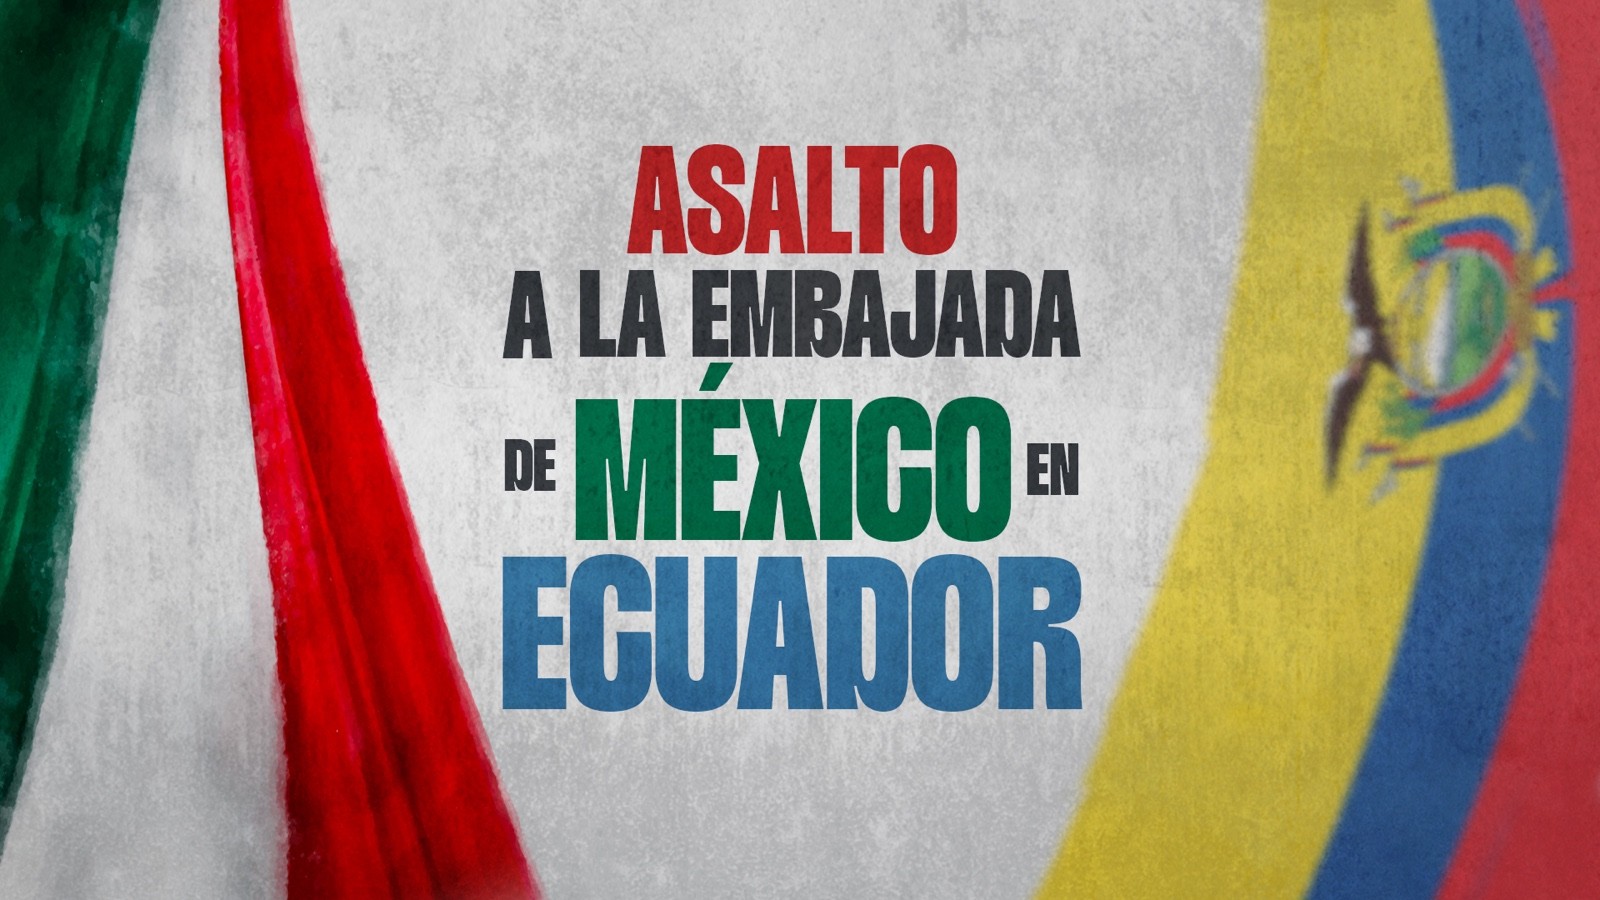 Asalto a la embajada de México en Ecuador